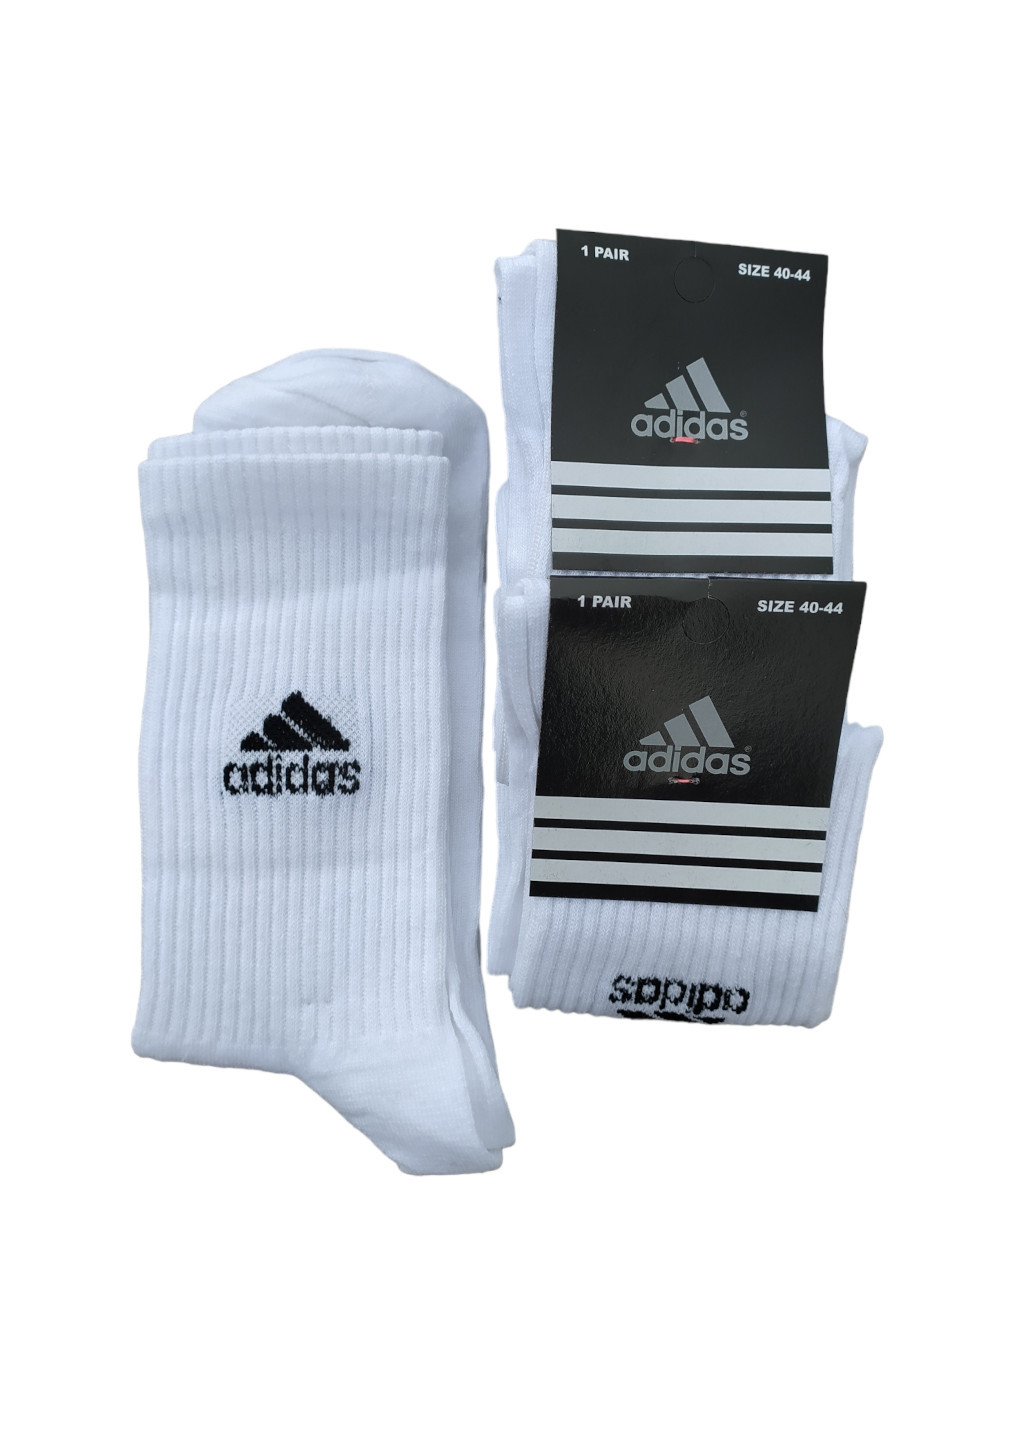 Високі шкарпетки Adidas 40-44 No Brand (258186303)